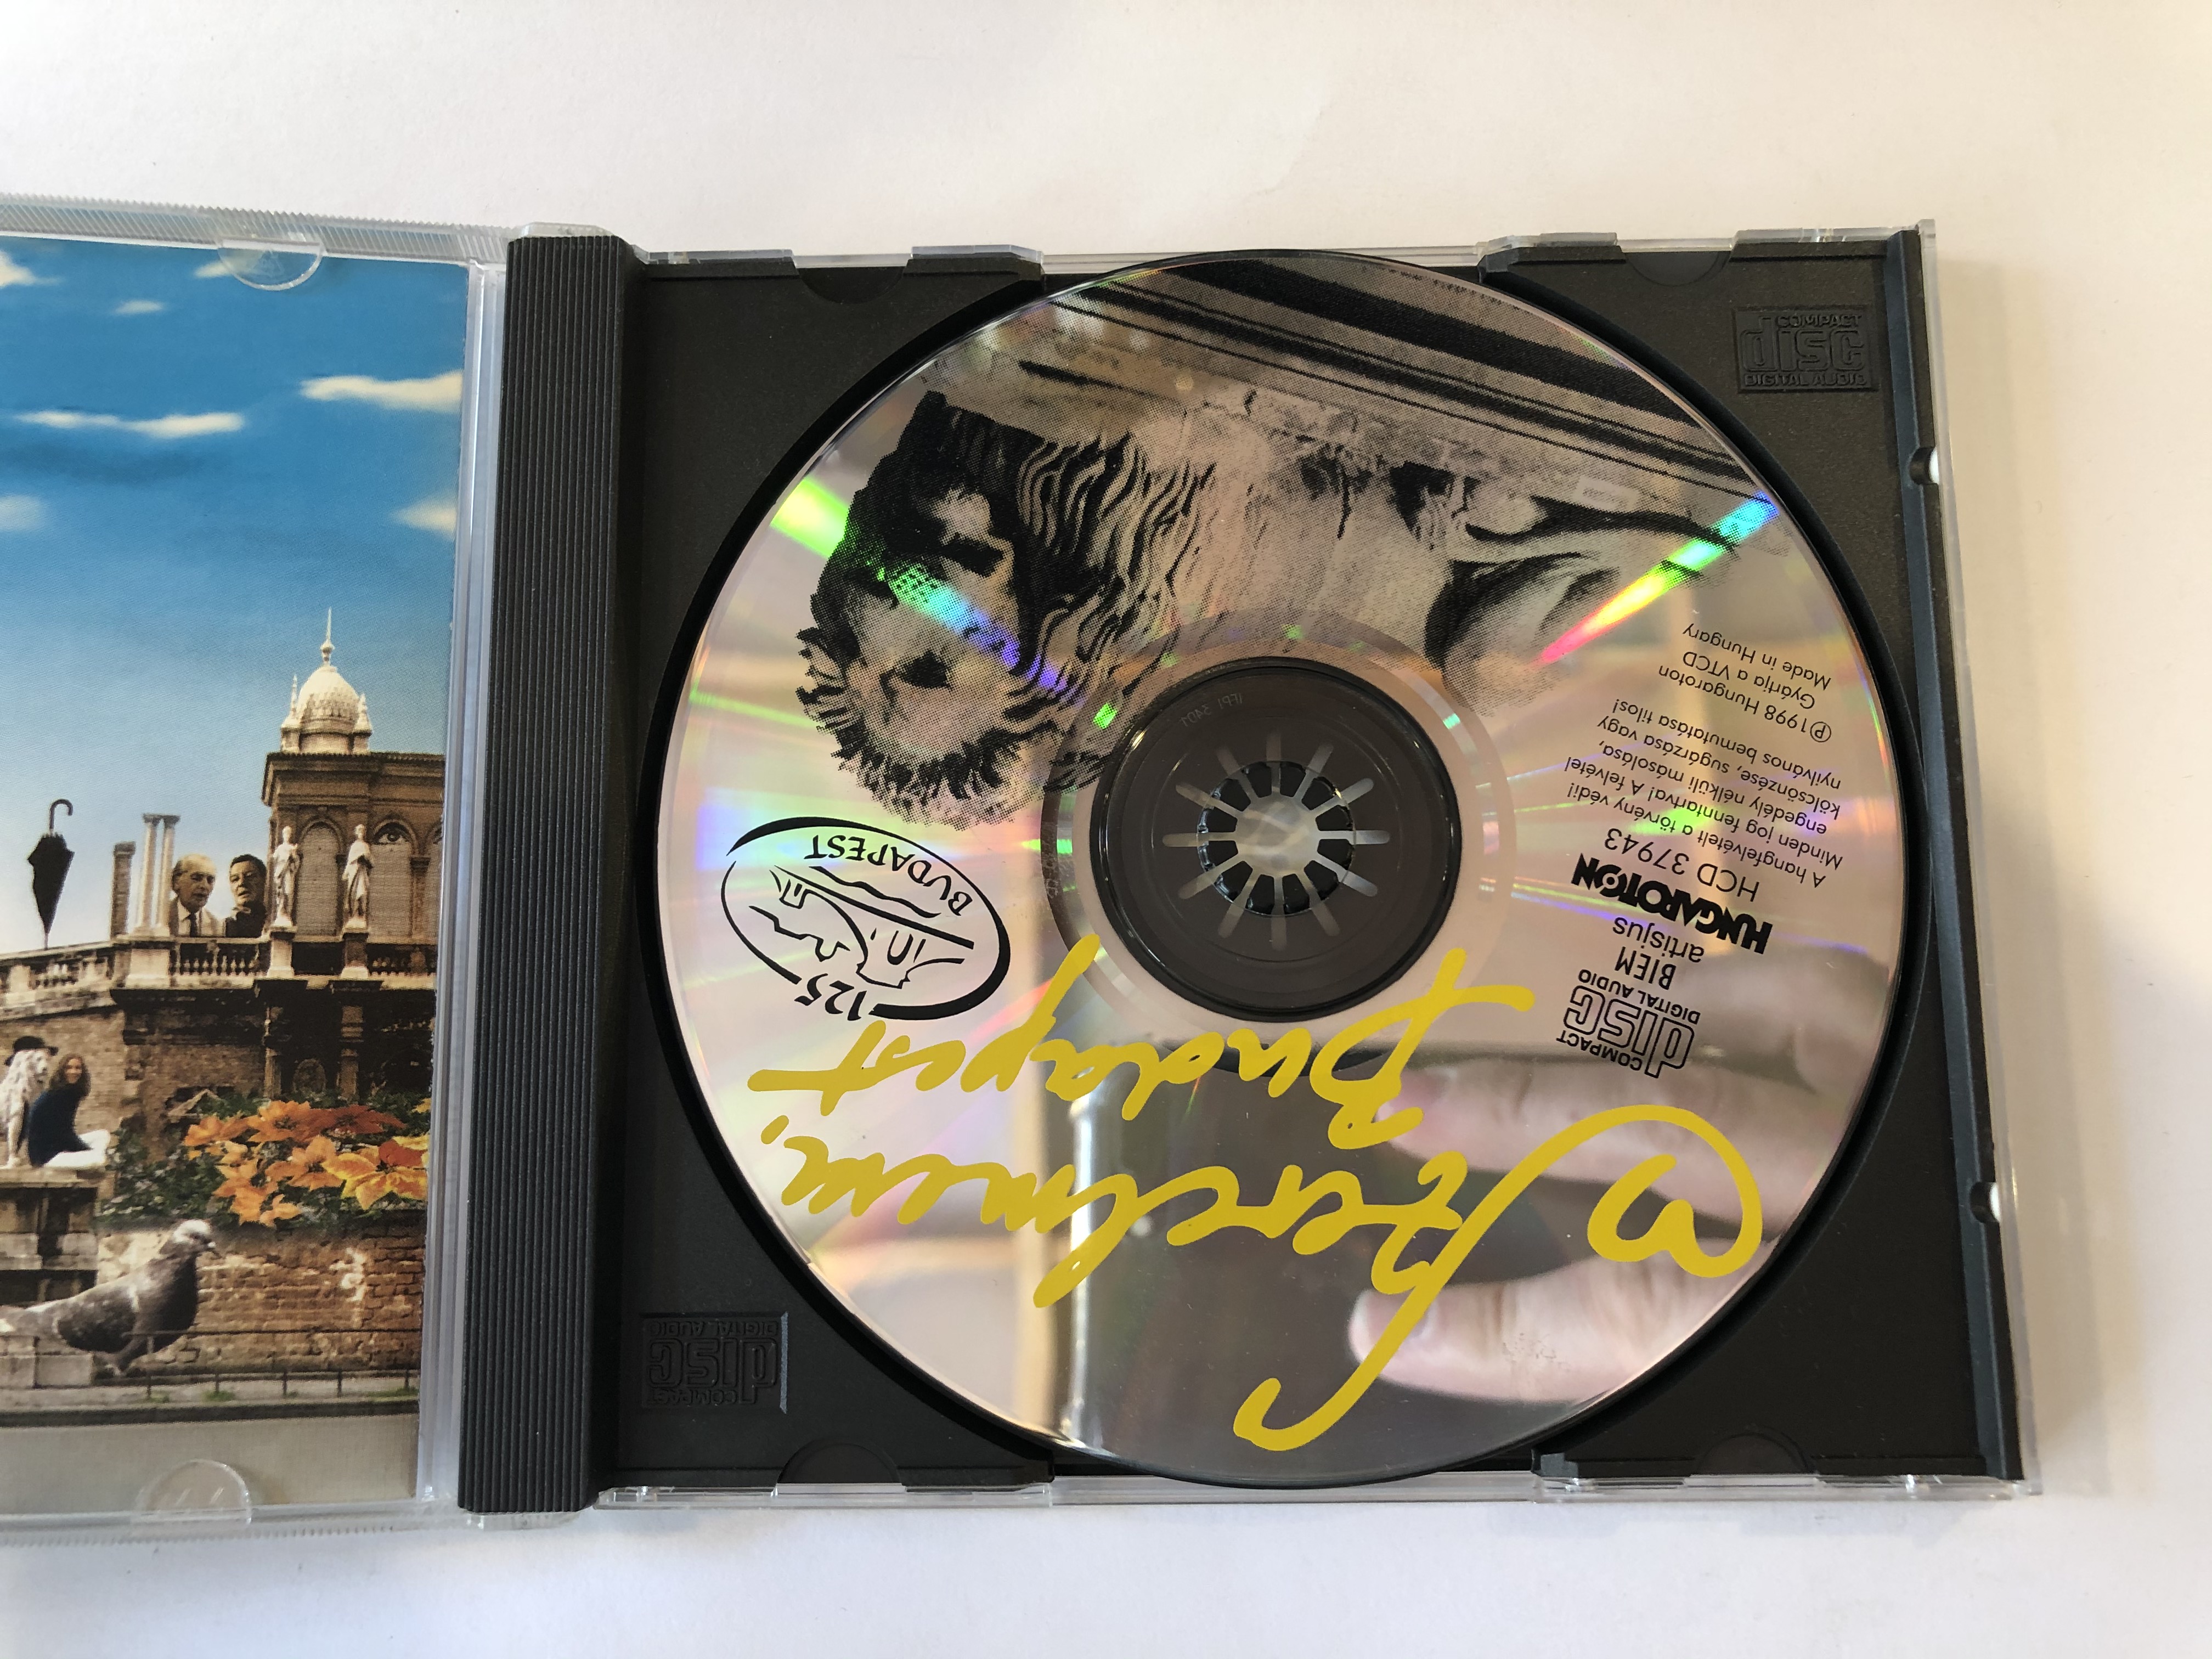 szerelmem-budapest-hungaroton-audio-cd-1998-hcd-37943-2-.jpg